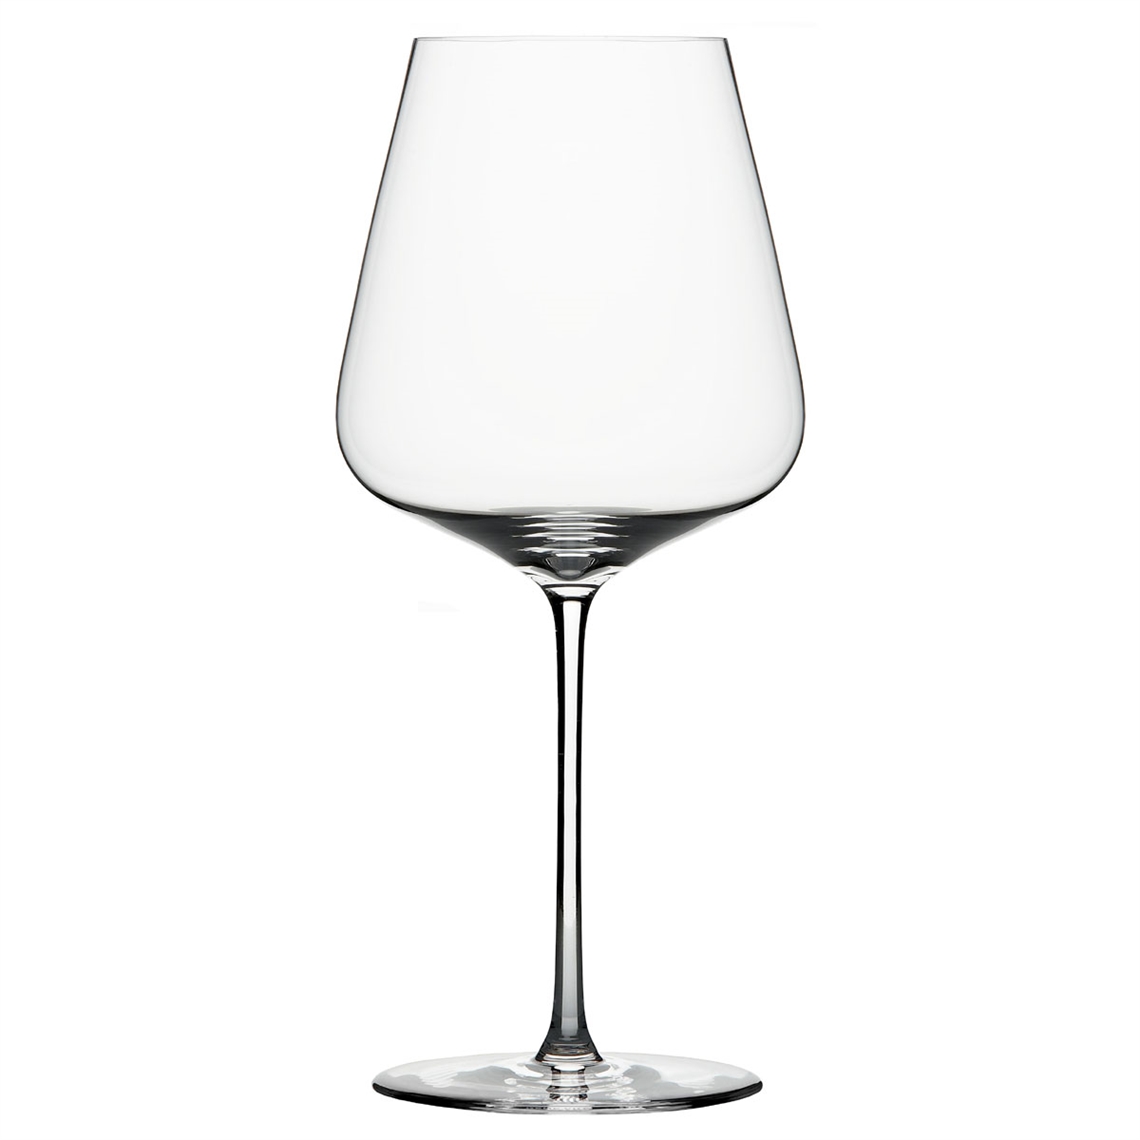 View more glassware from our Premium Mouth Blown Glassware range